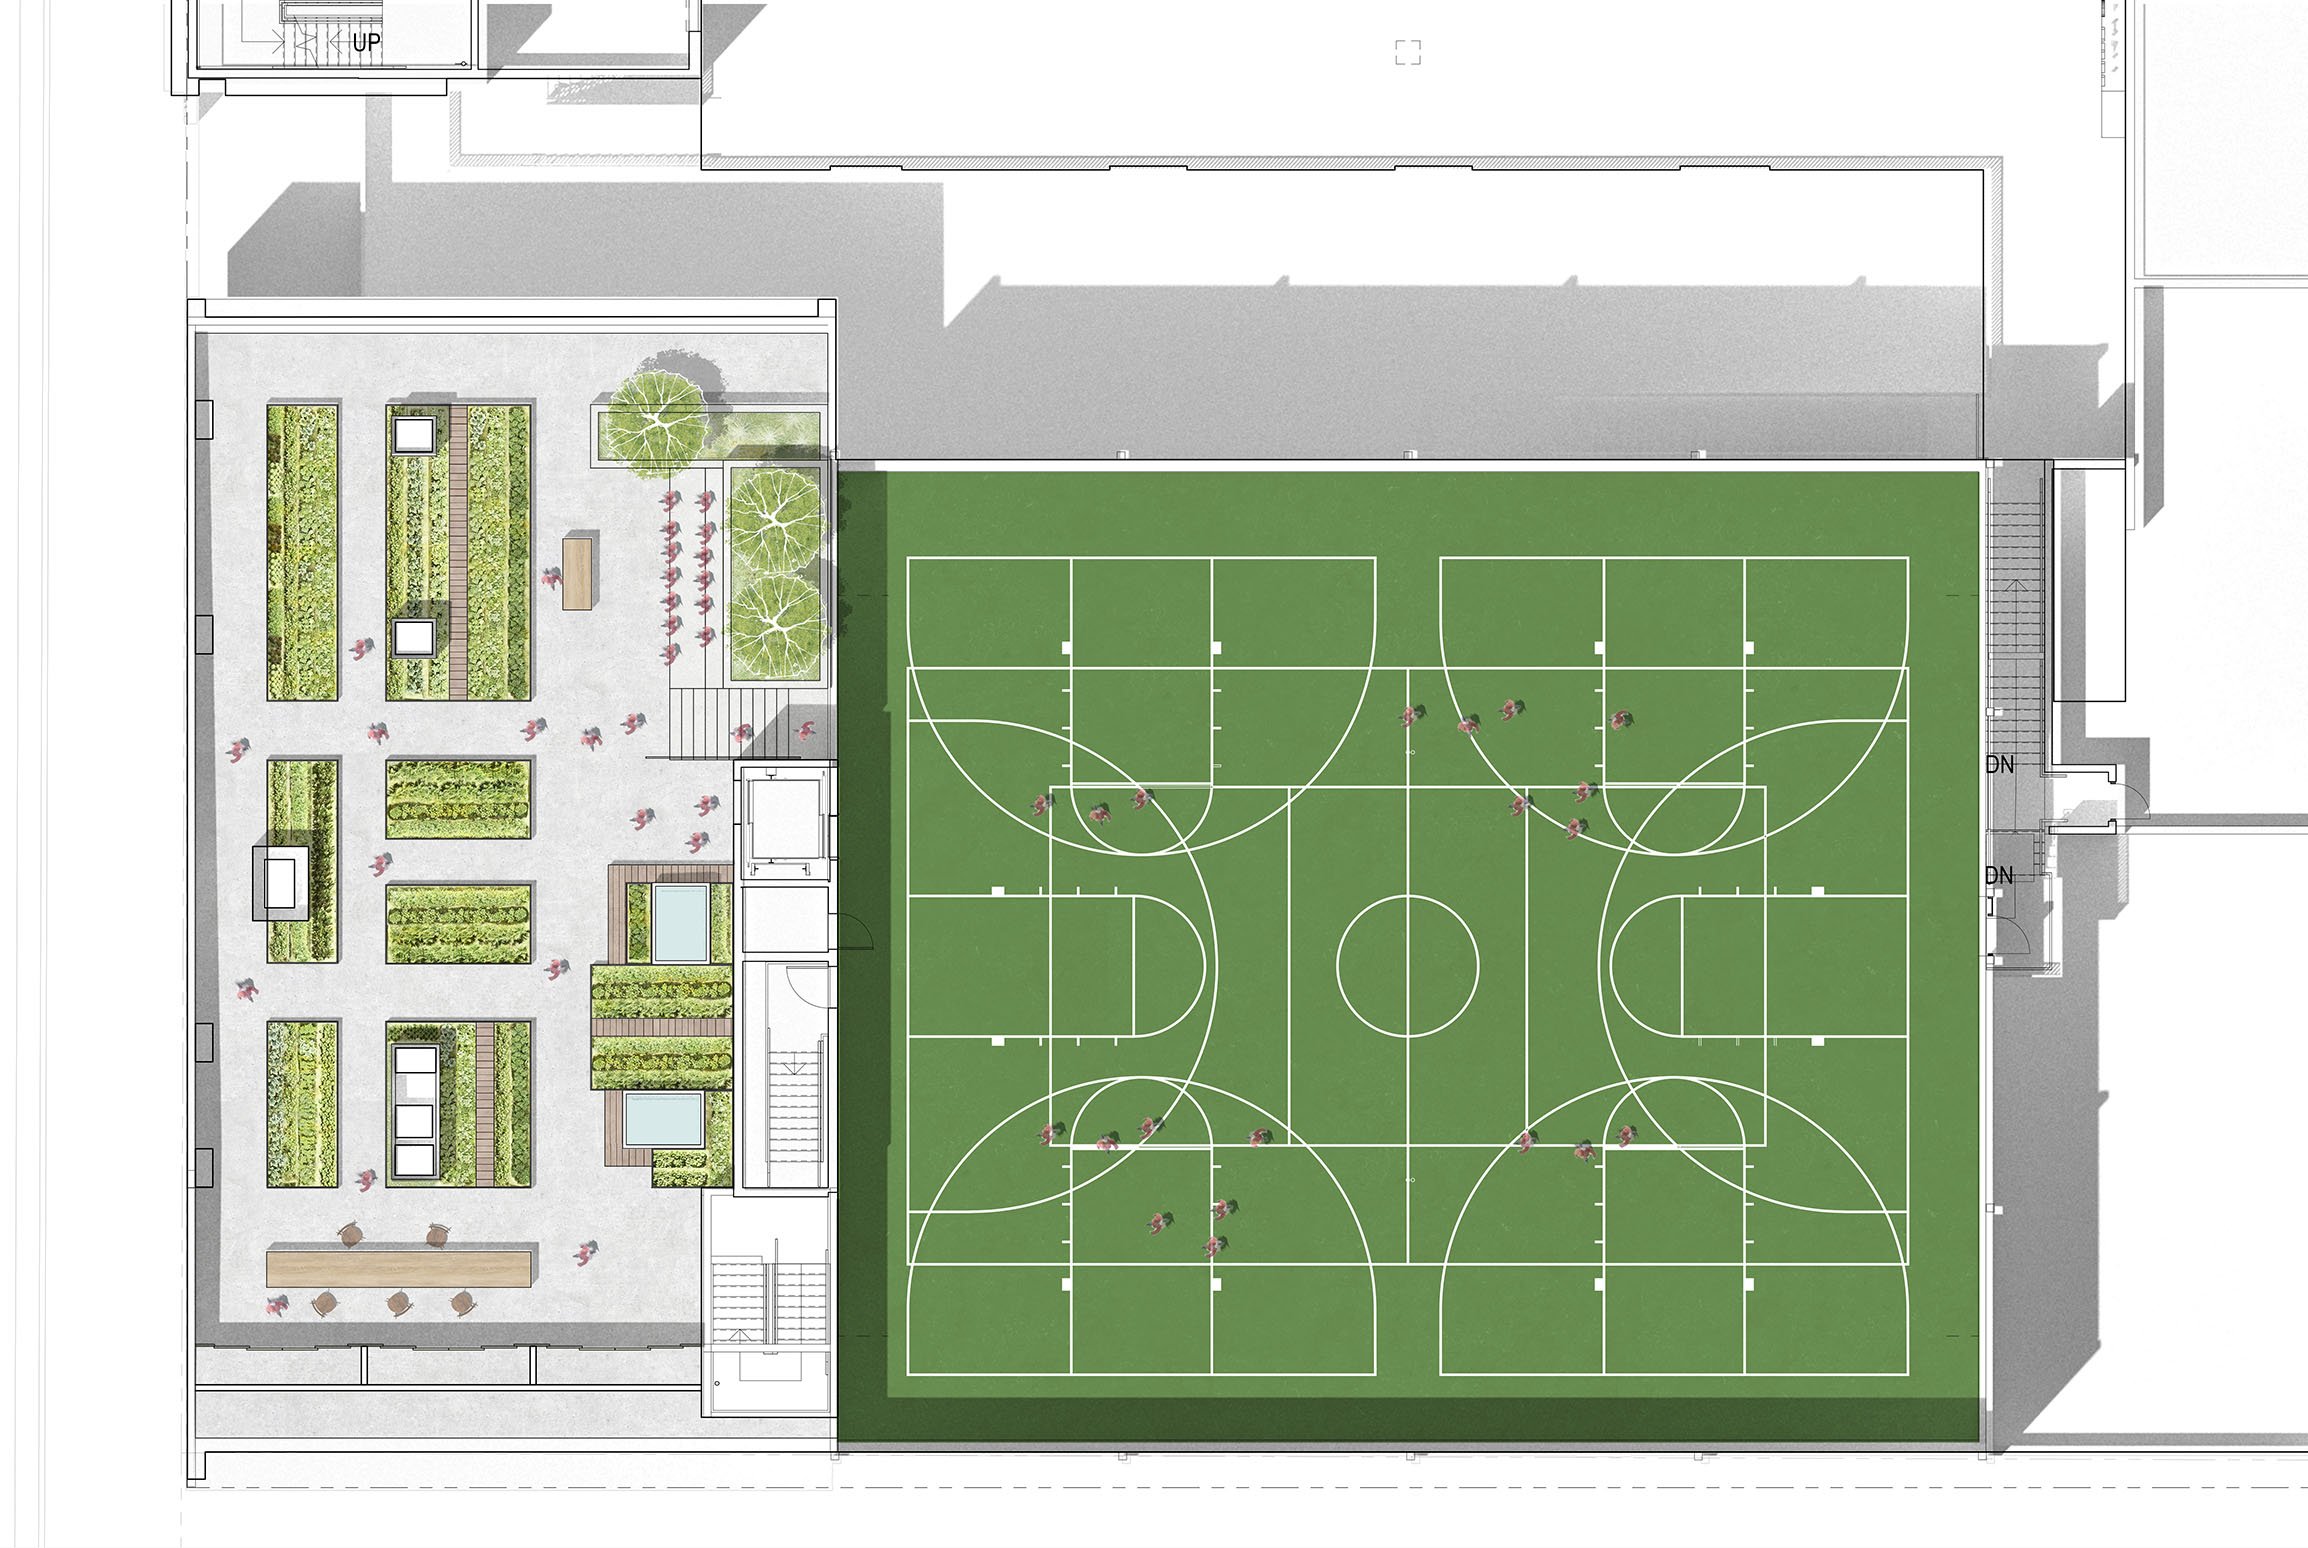 SEED LA-edible garden sports court plan-Tina Chee Landscape Studio.jpg